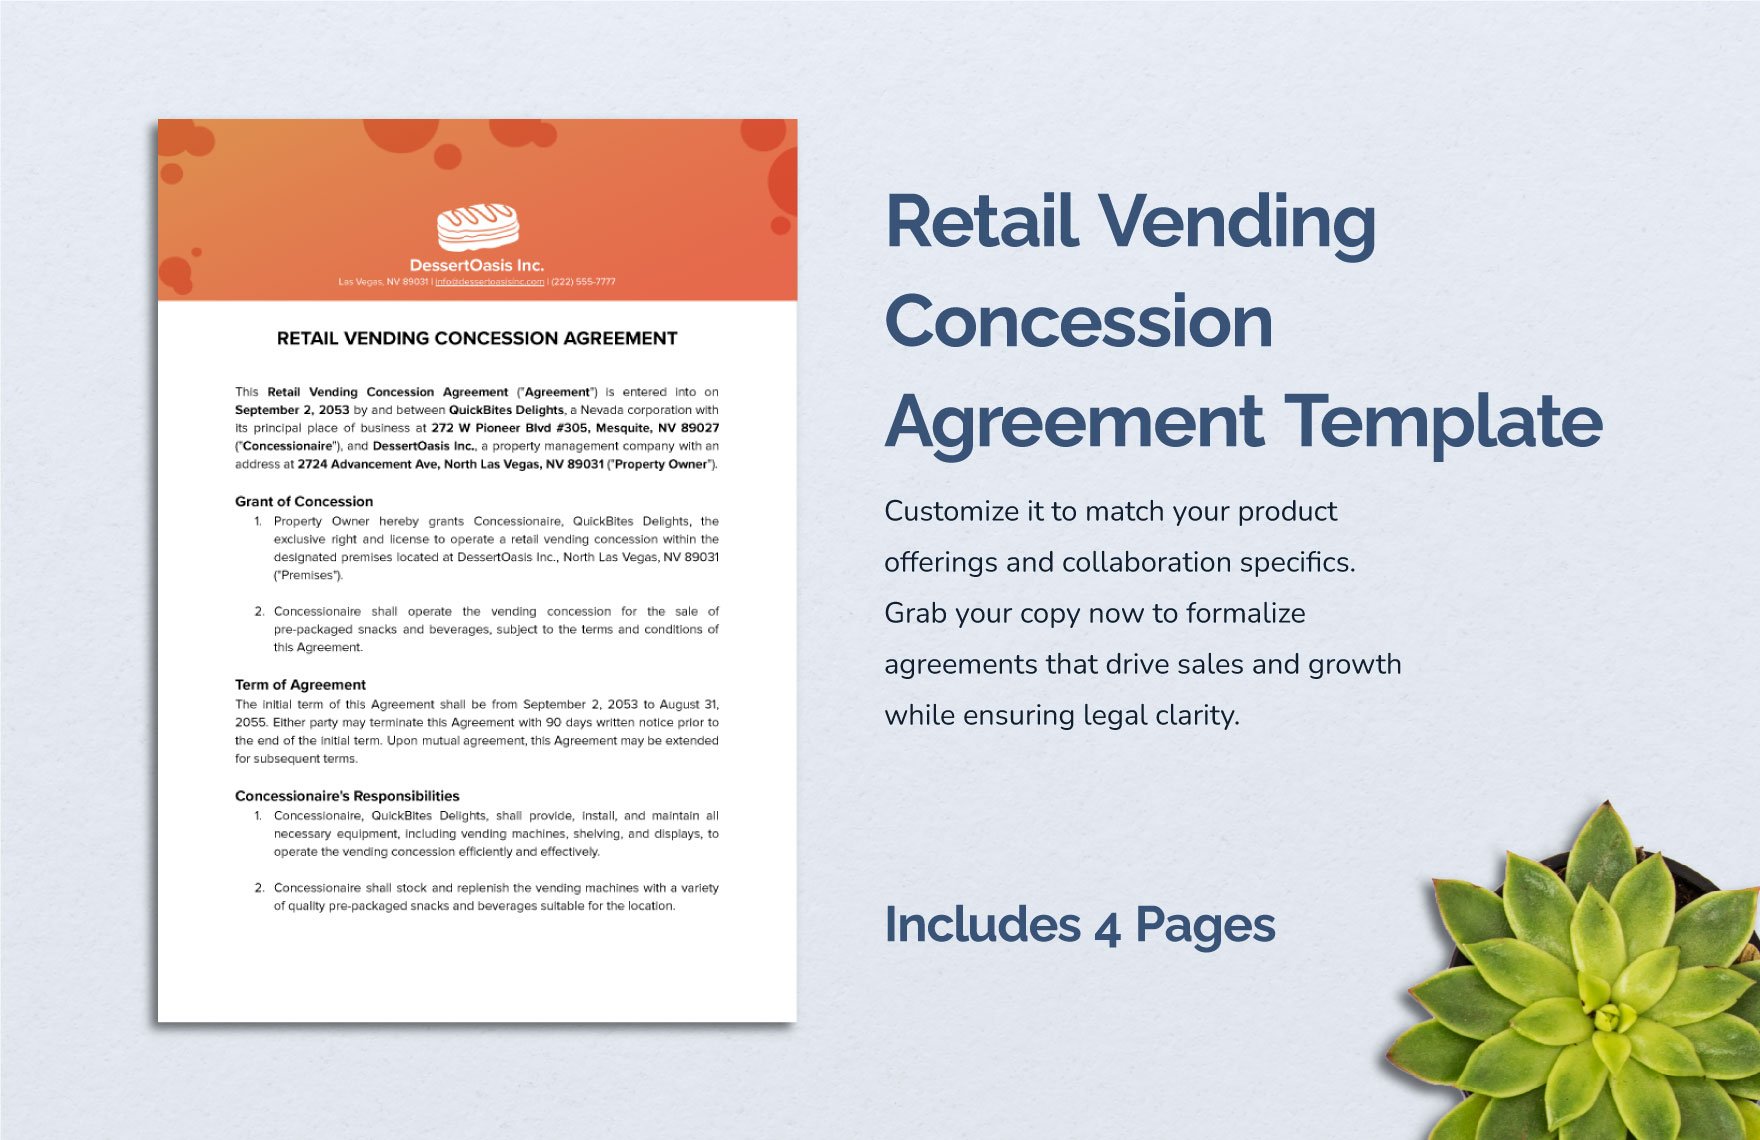 Retail Vending Concession Agreement Template